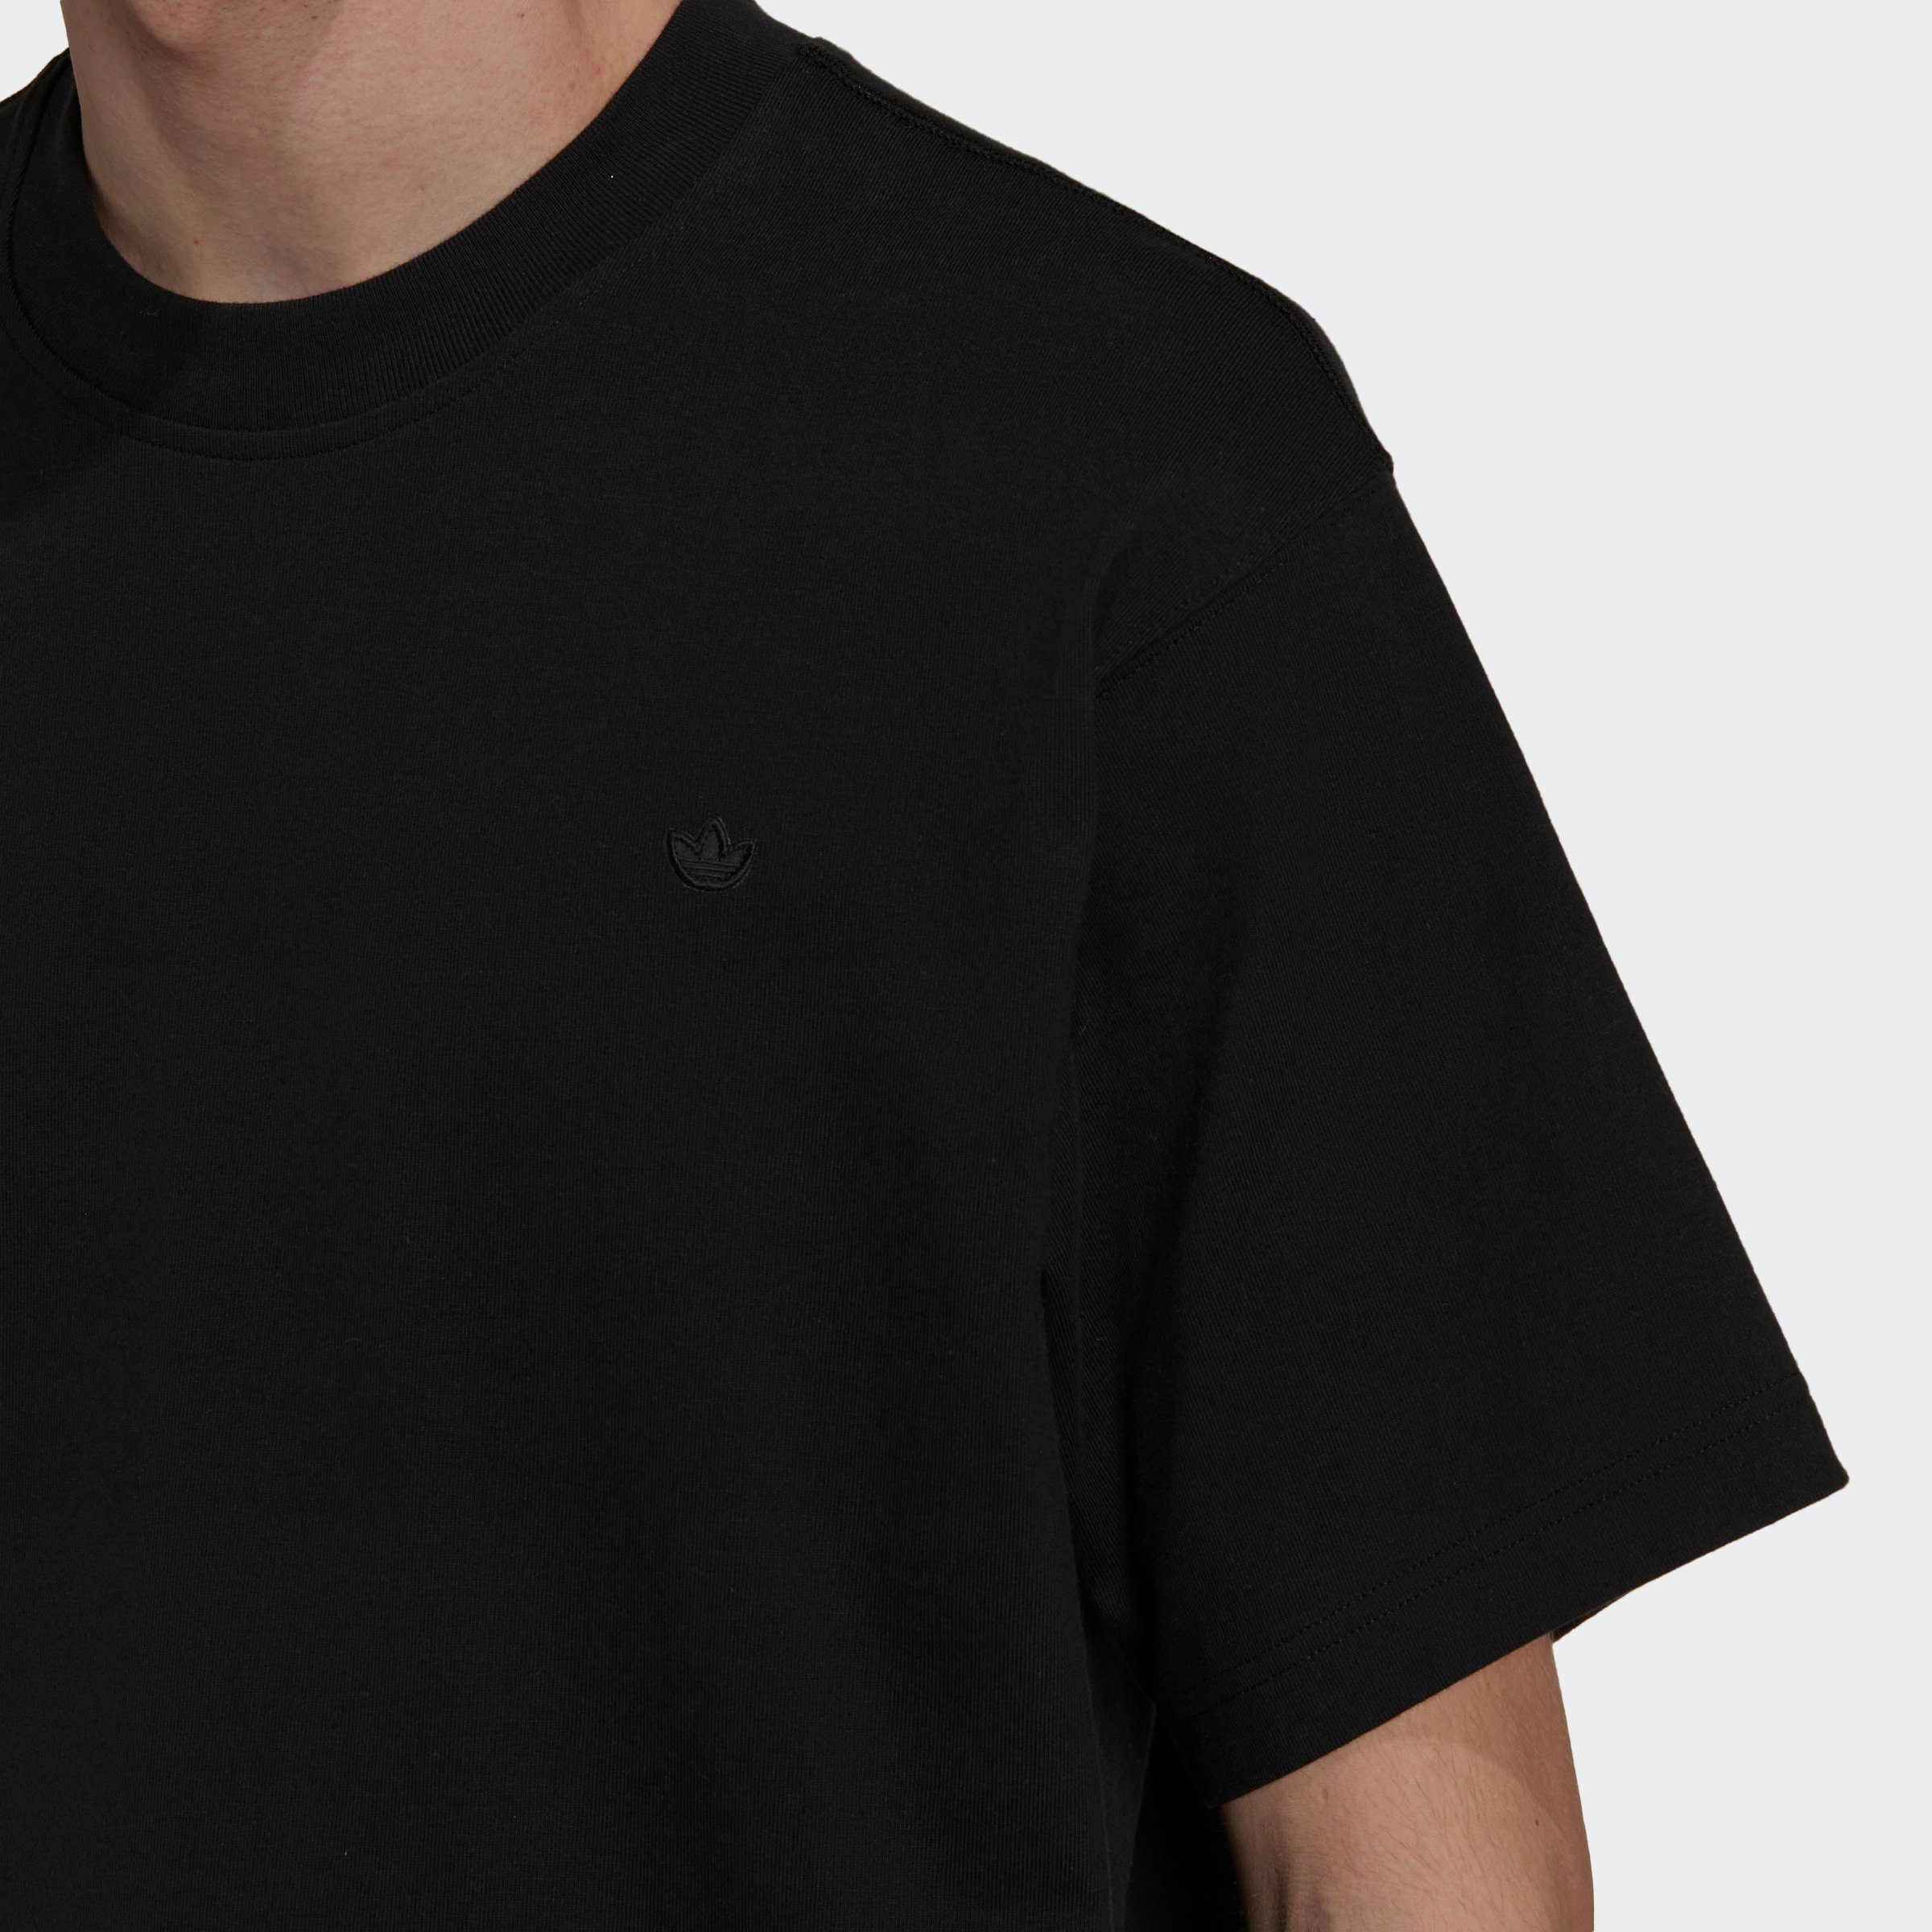 Black T-Shirt C Originals adidas Tee